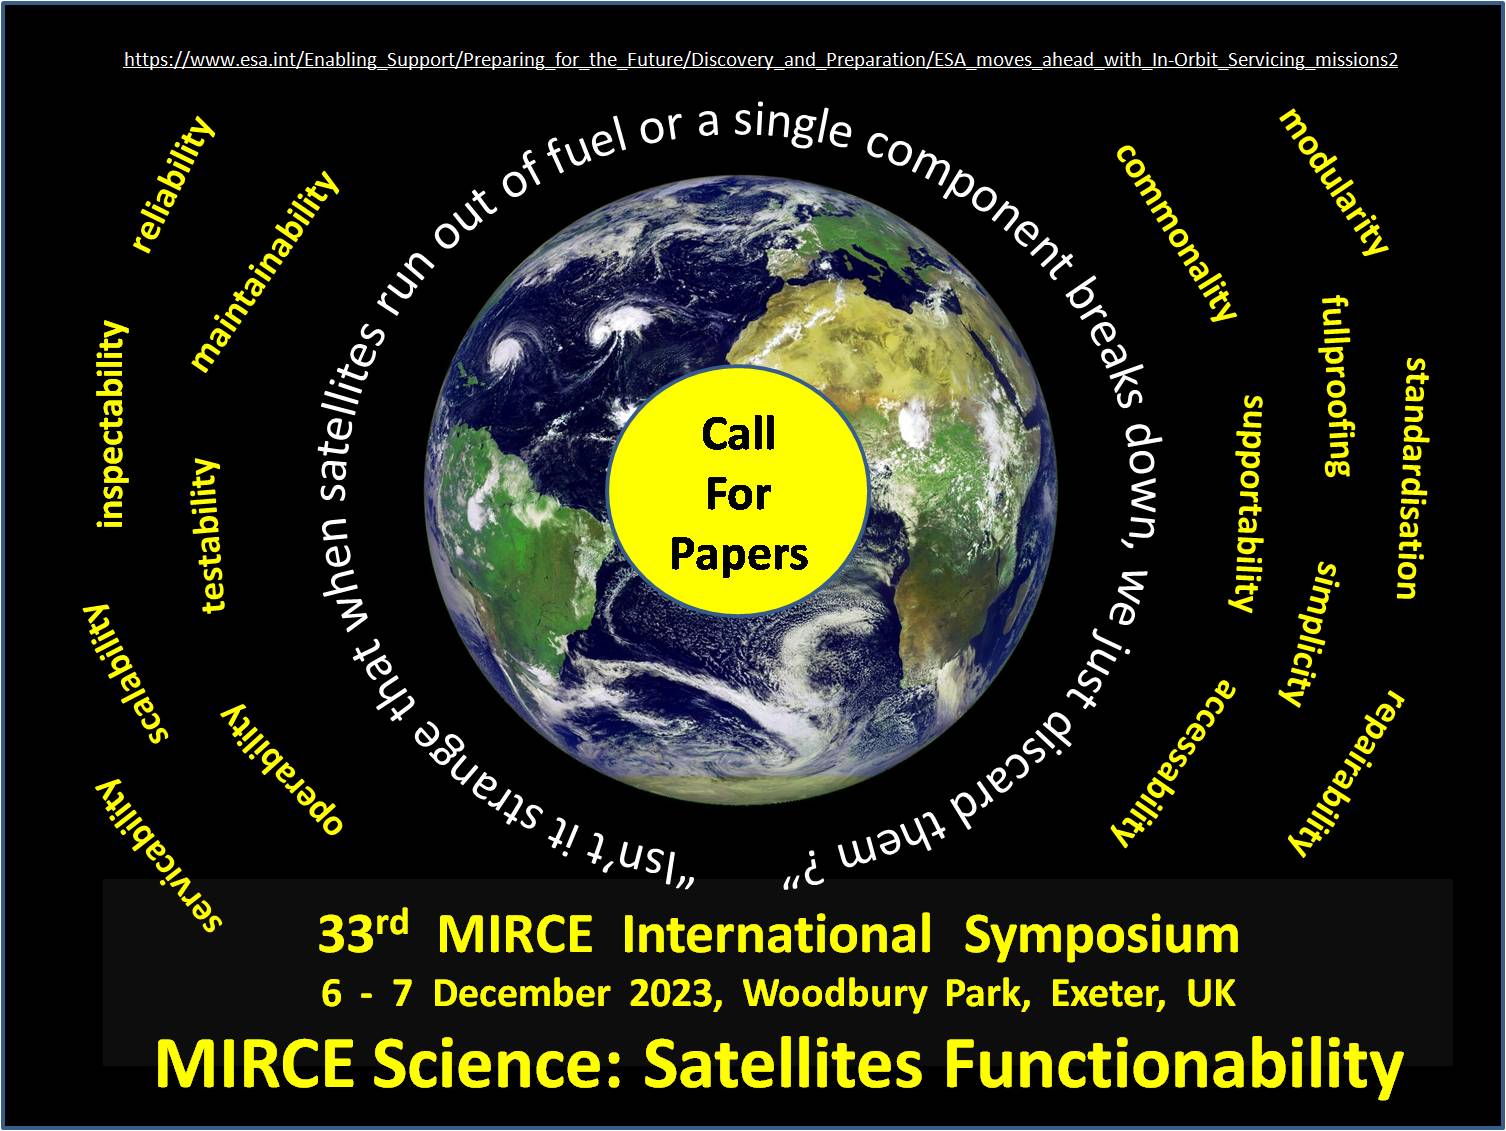 MIRCE Symposium -call for paper - LAST